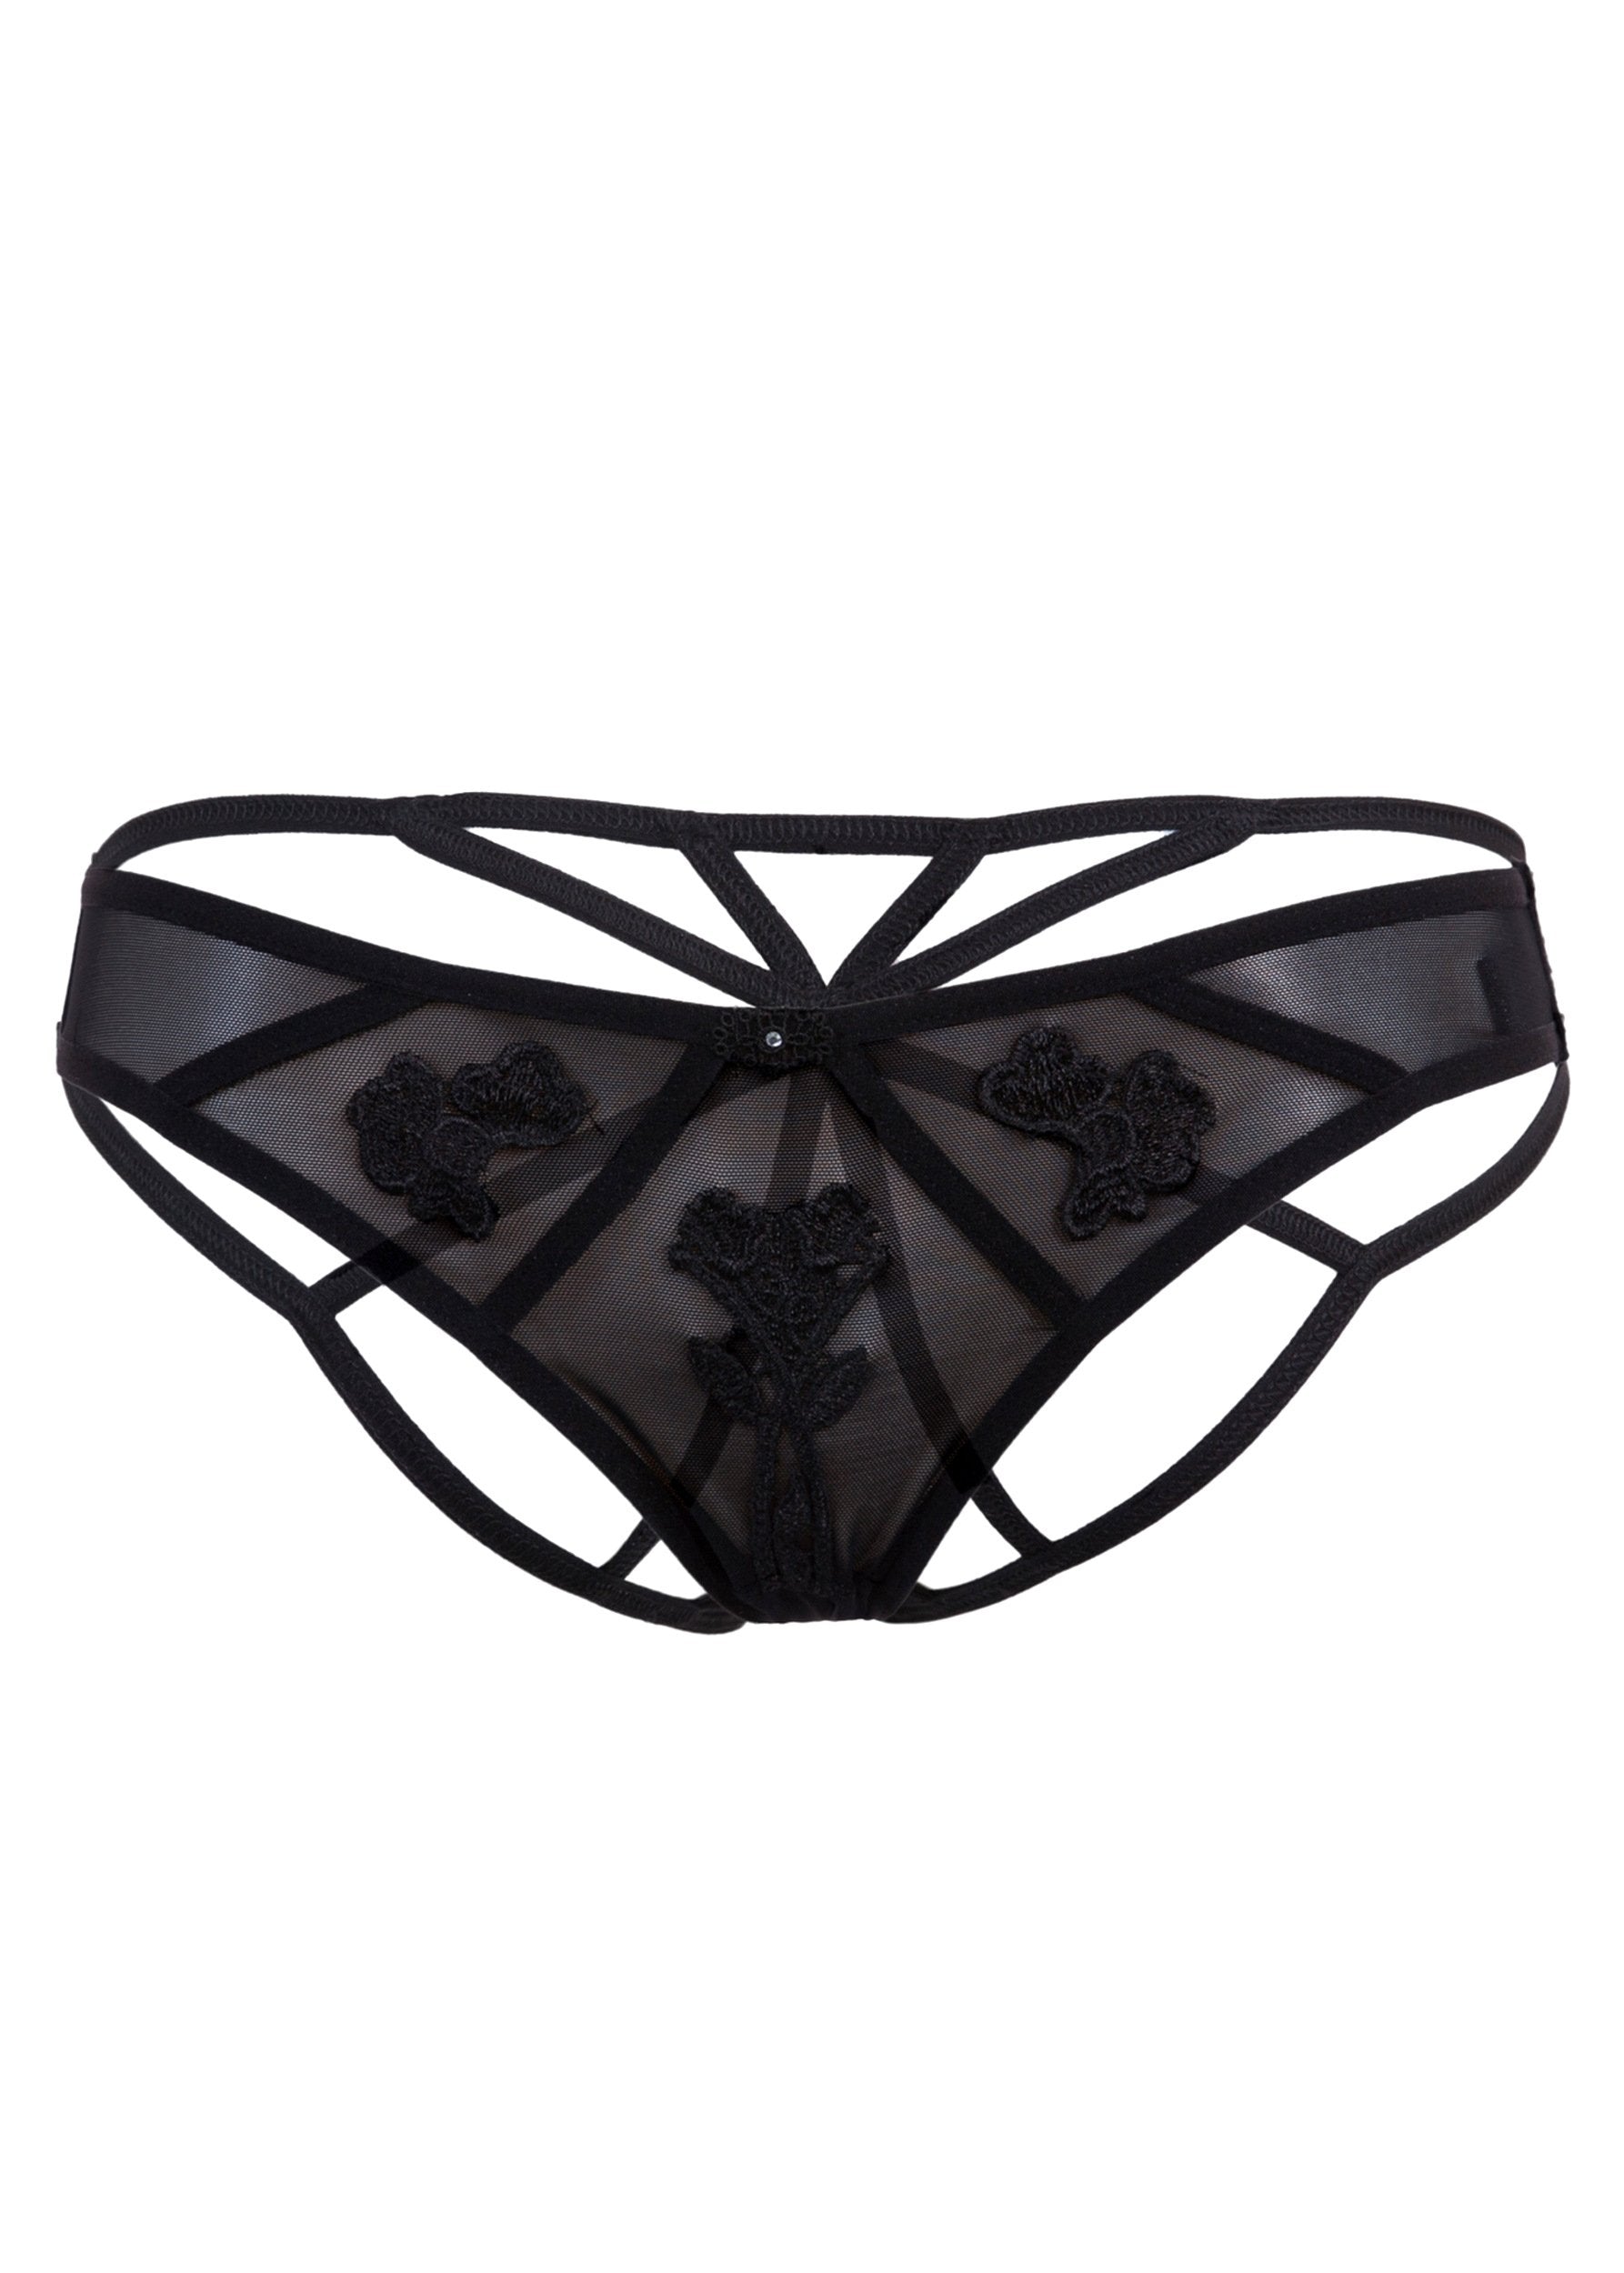 Bluebella Nova Black Open Panties - Crotchless Lingerie, Sexy Lingerie